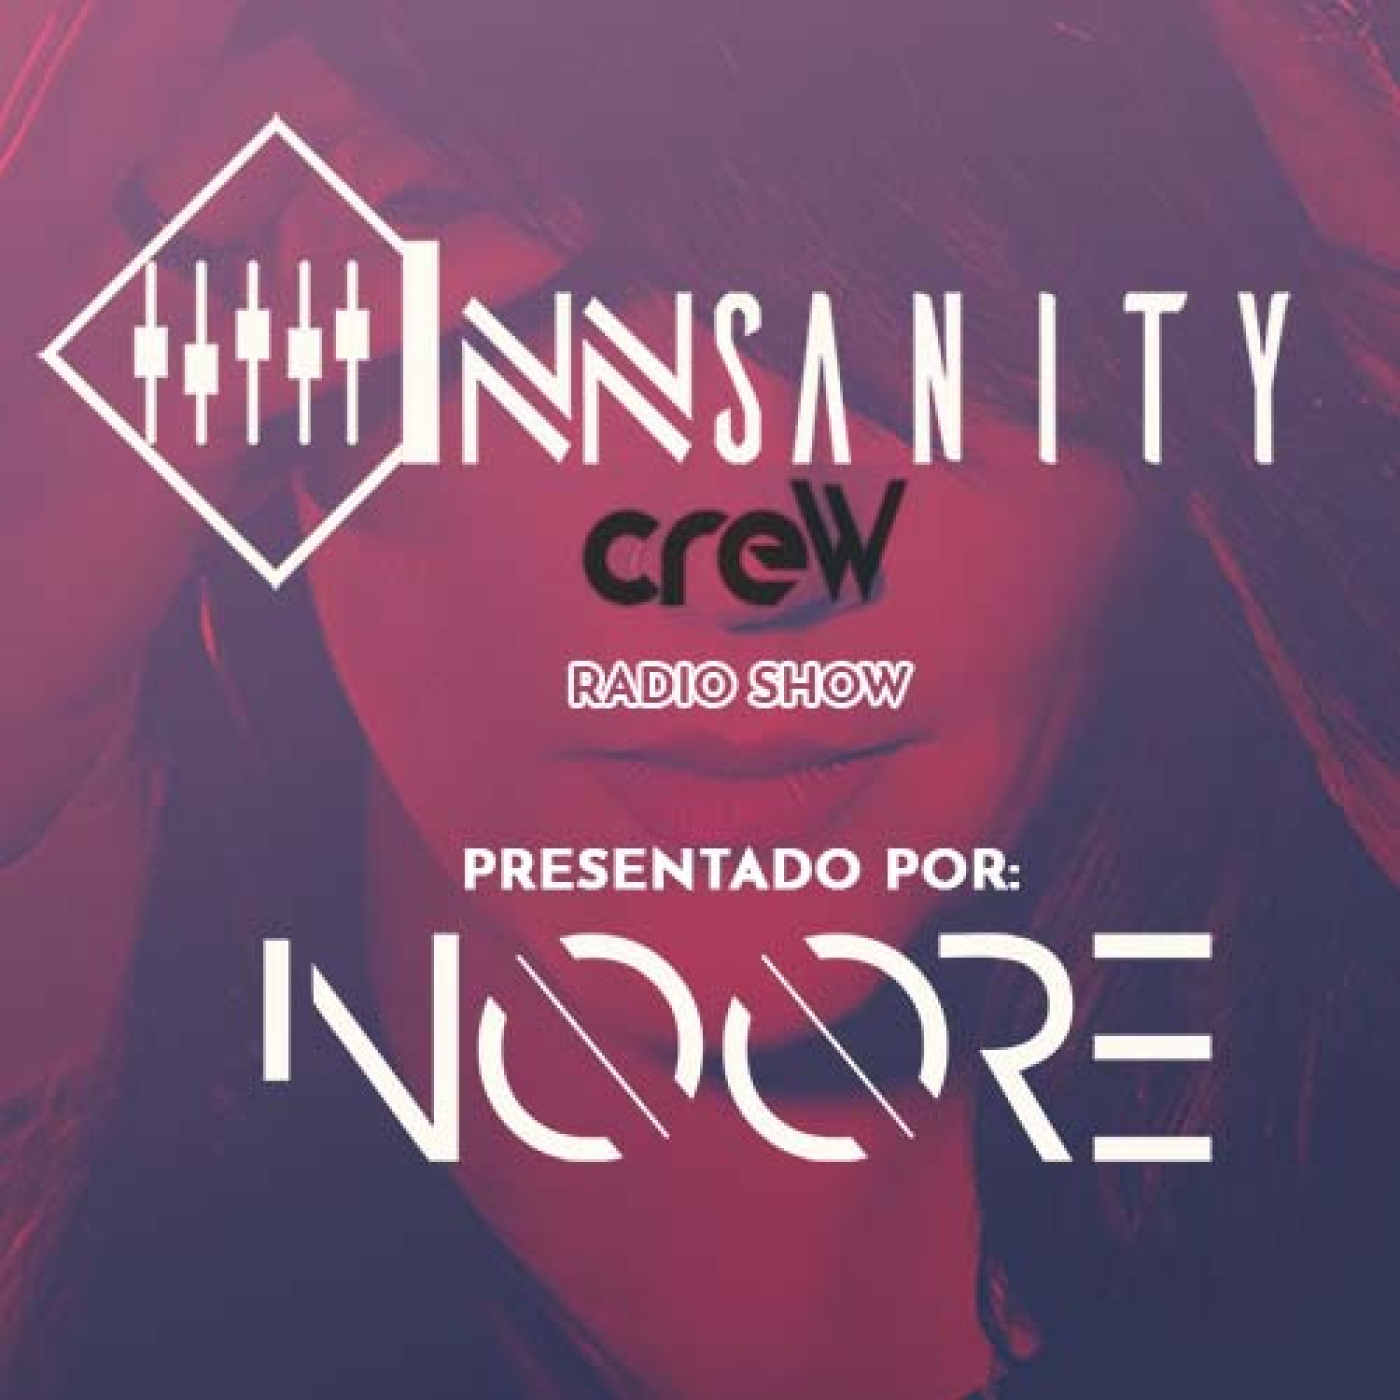 InNsanity Crew Radio Show by NOORE ::: Episode 091 ::: Season 6 :::